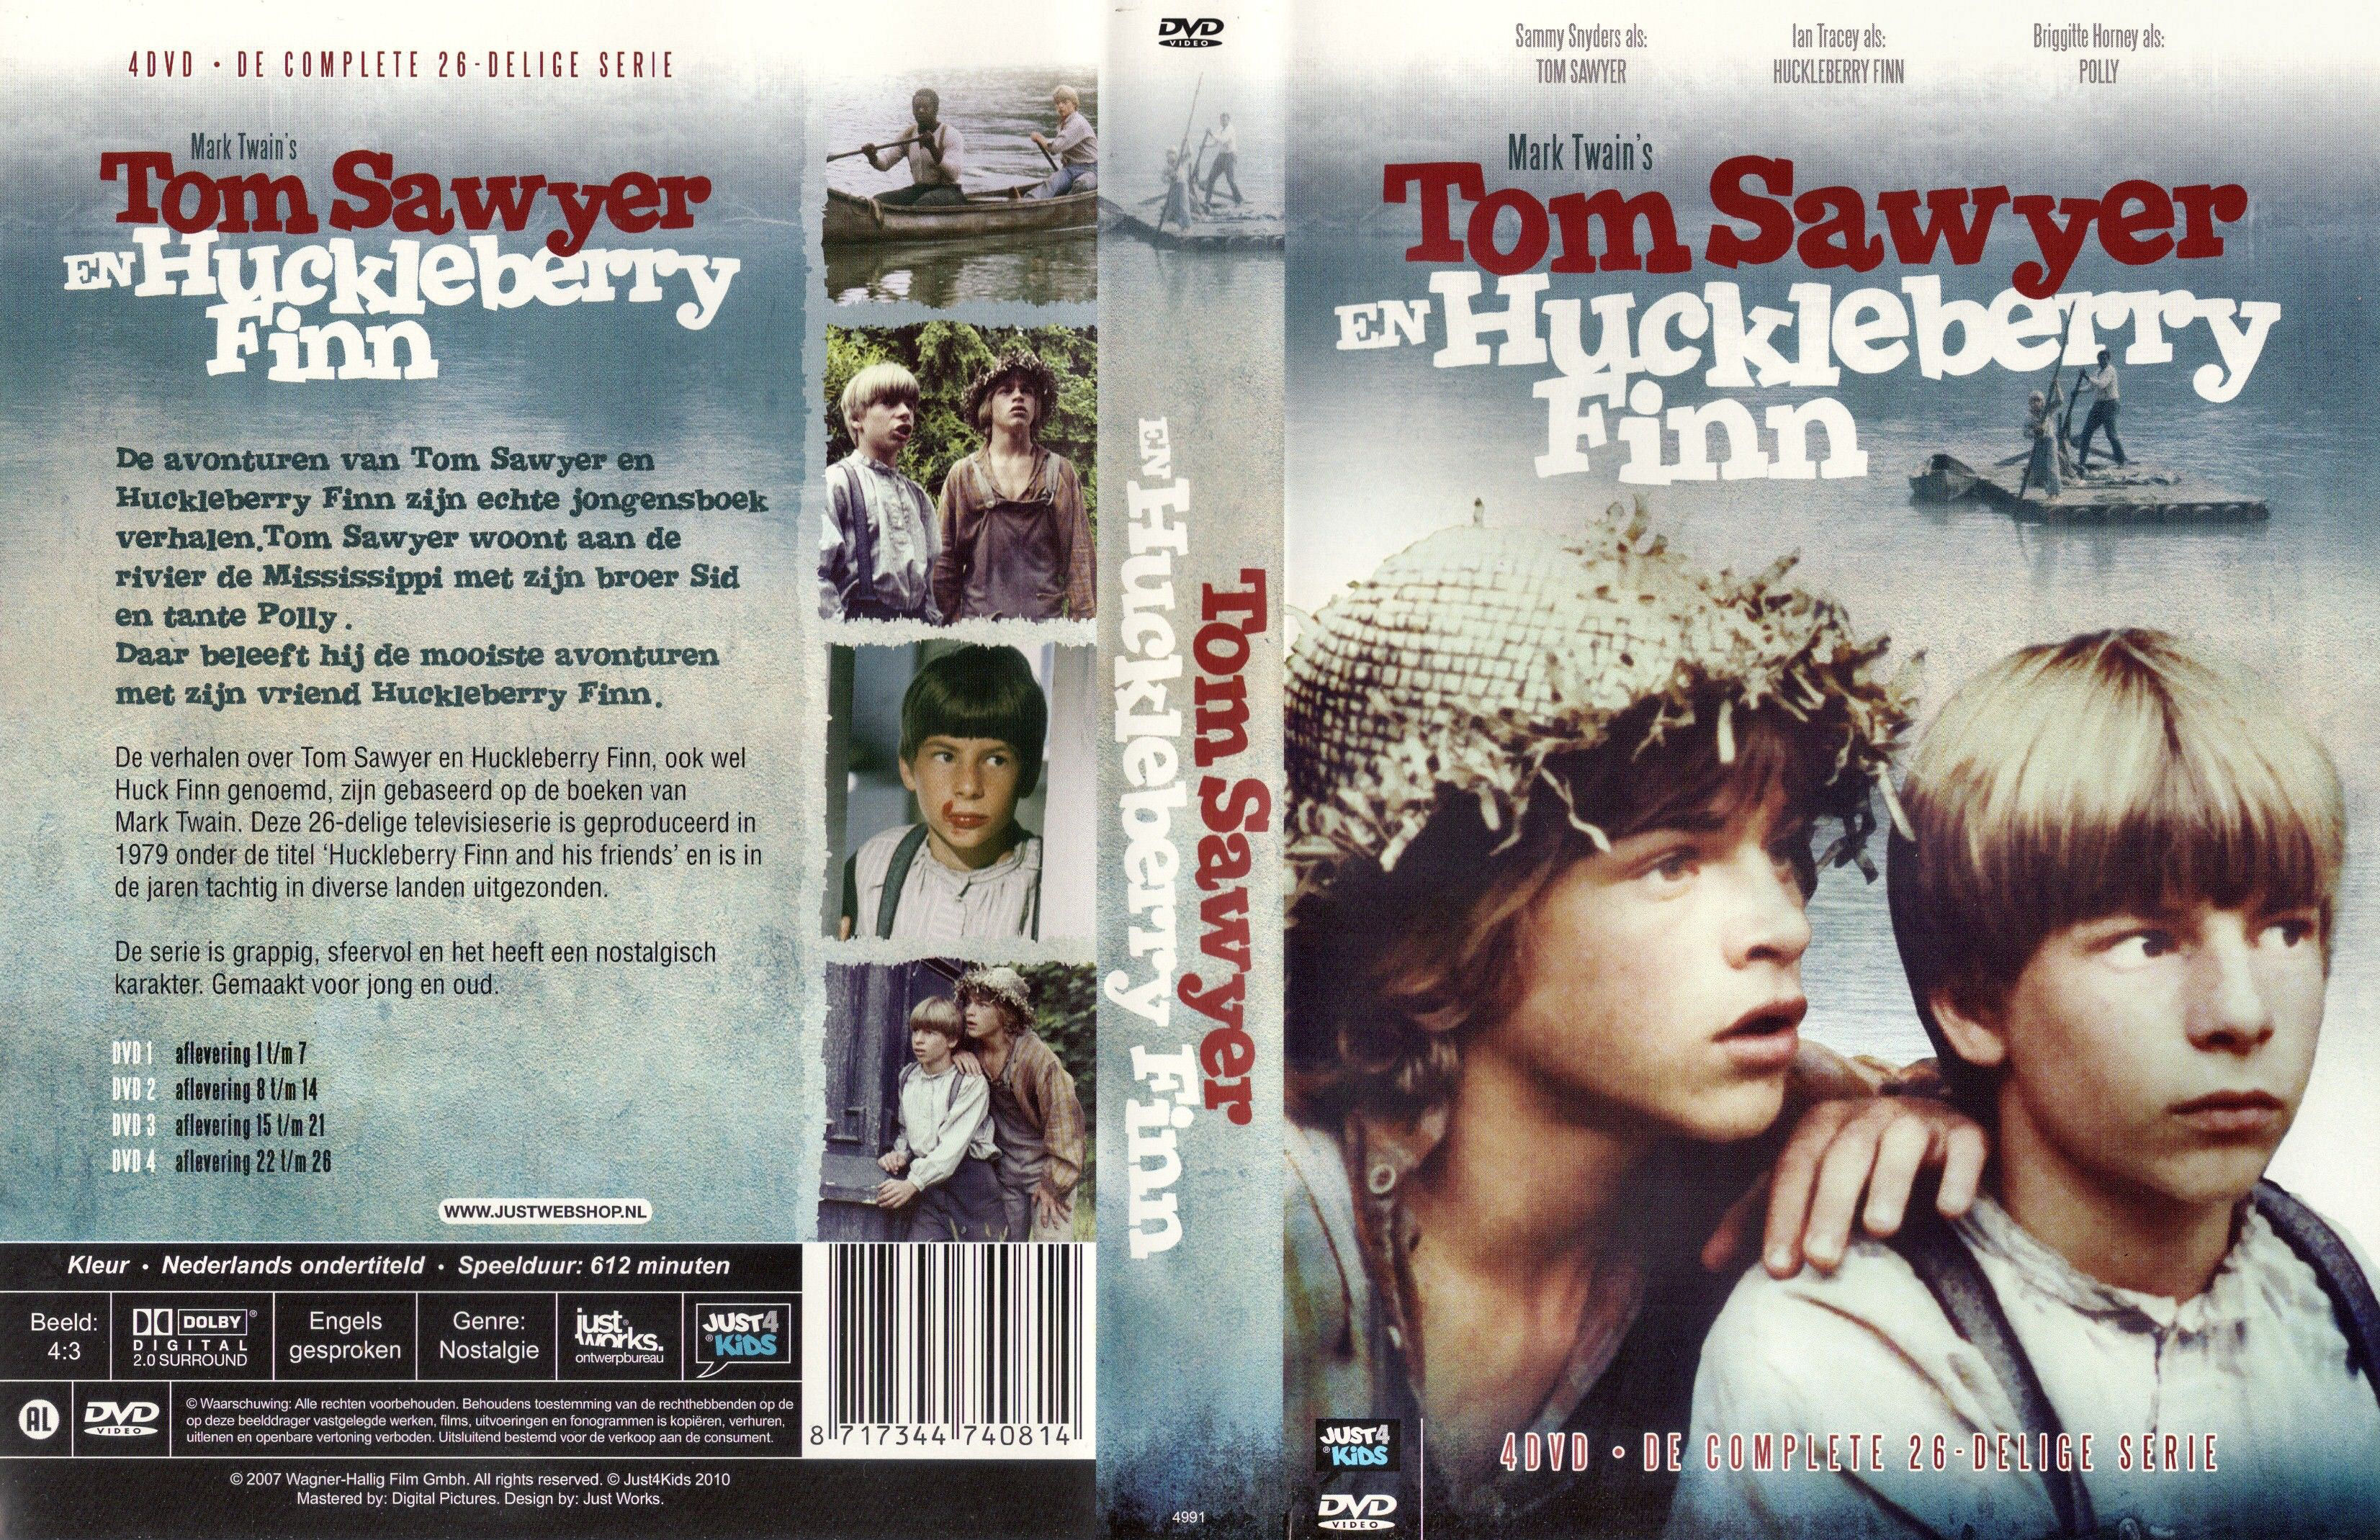 Tom Sawyer en Huckleberry Finn (1979) - DvD 2